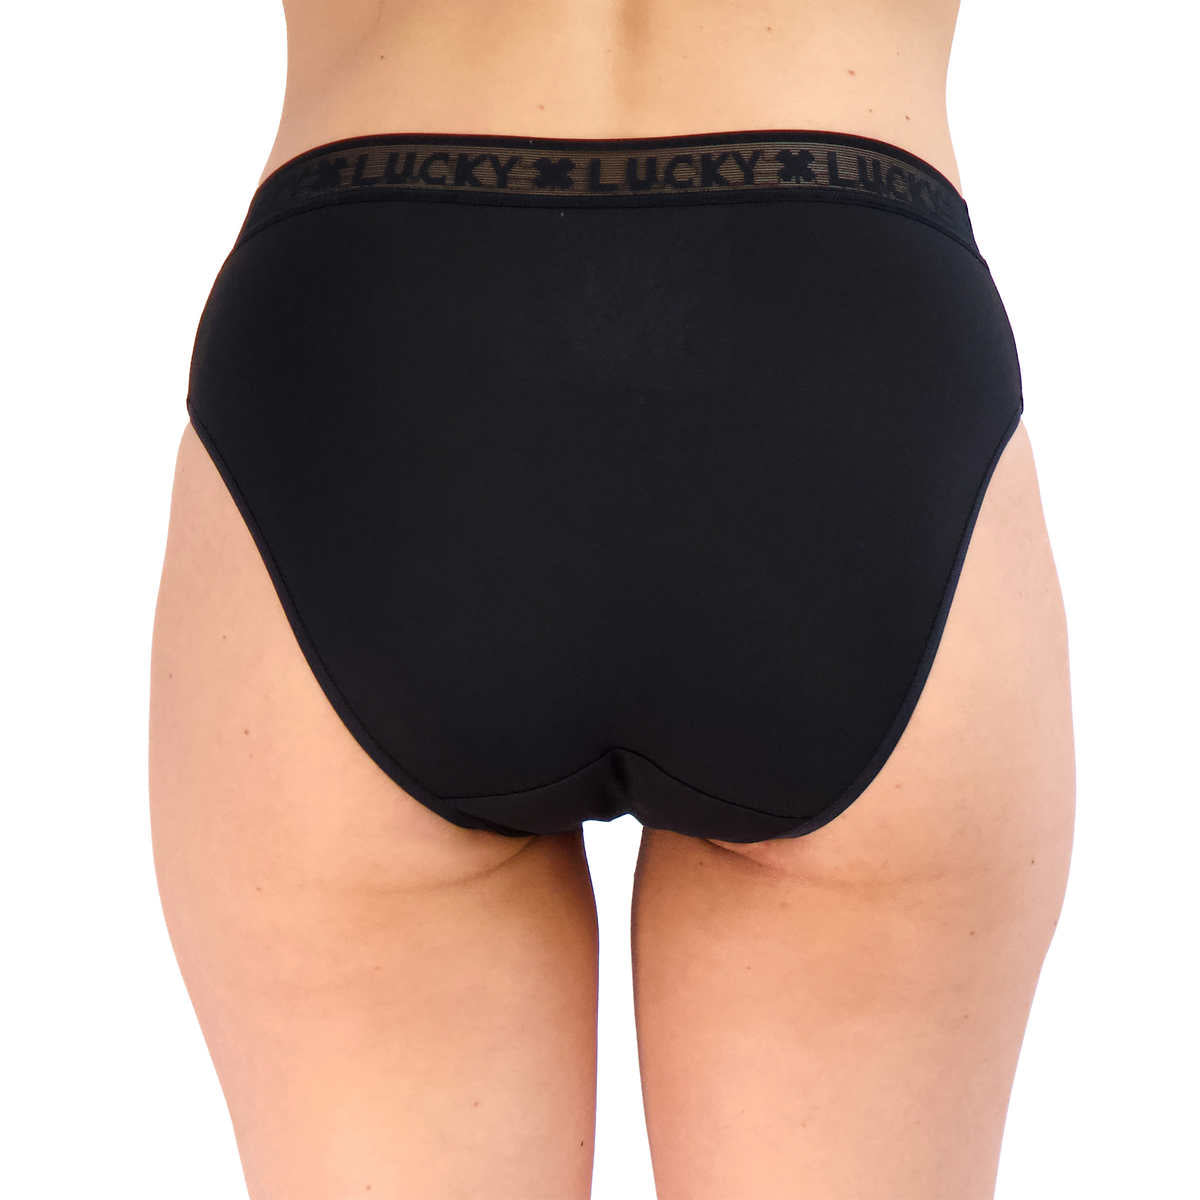 Lucky Brand Women's 5-Pack Underwear Ultra Soft High Cut Full Coverage Panties